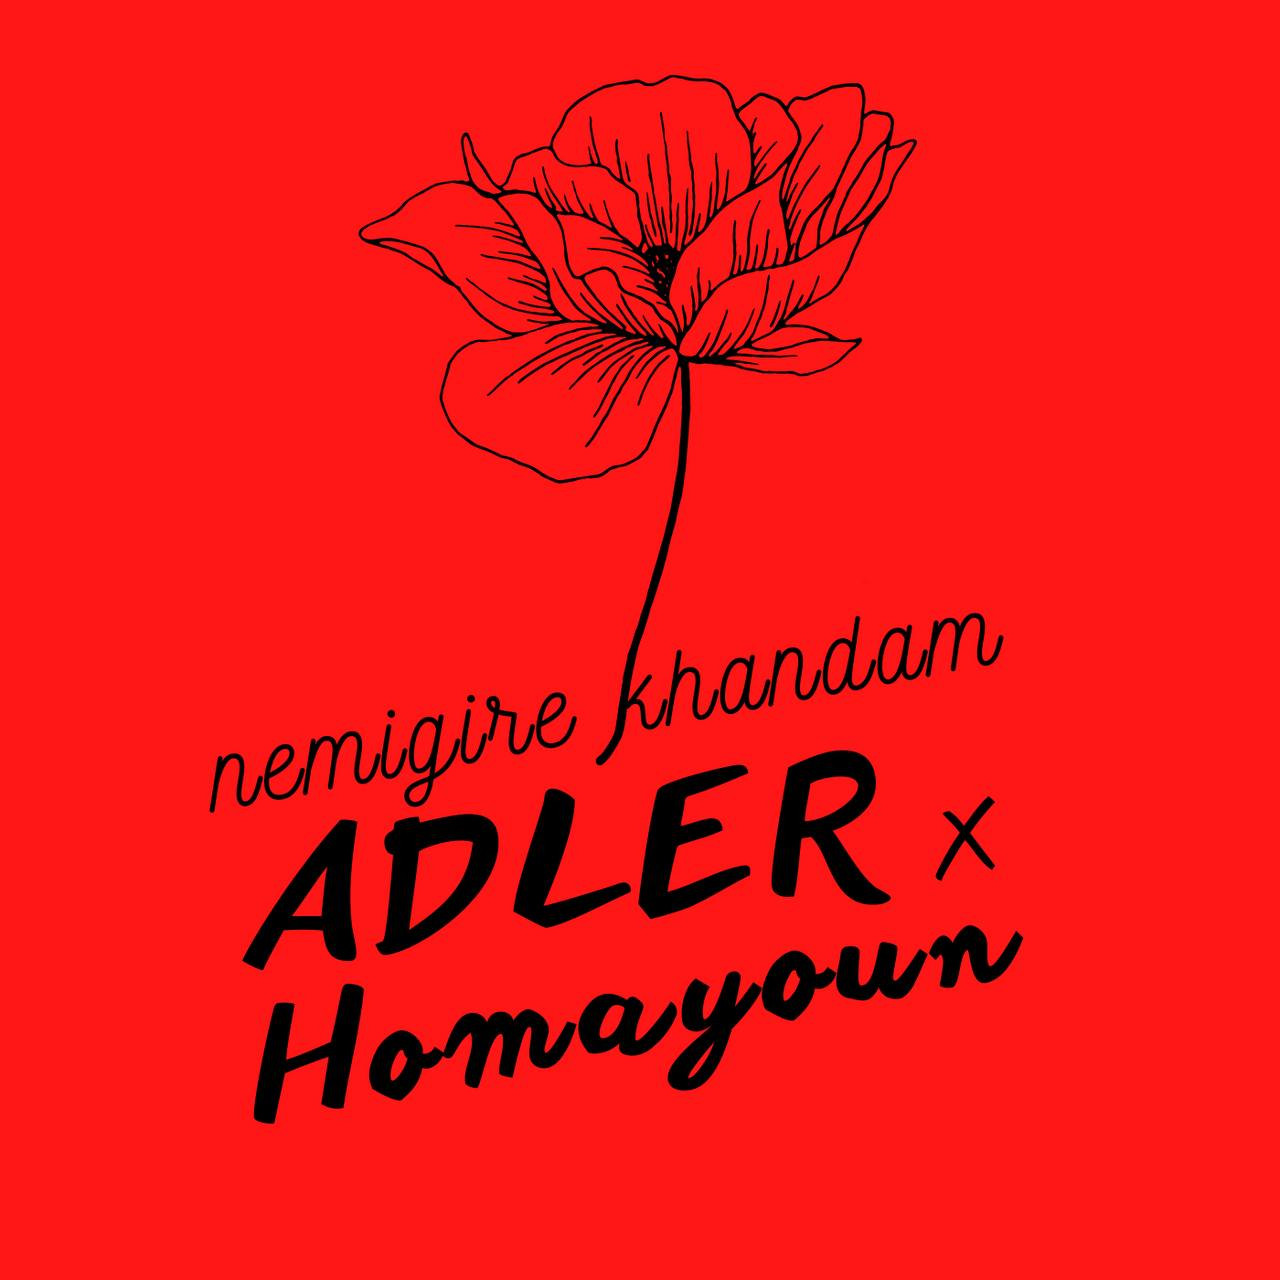 Adler x Homayoun - Nemigire Khandam